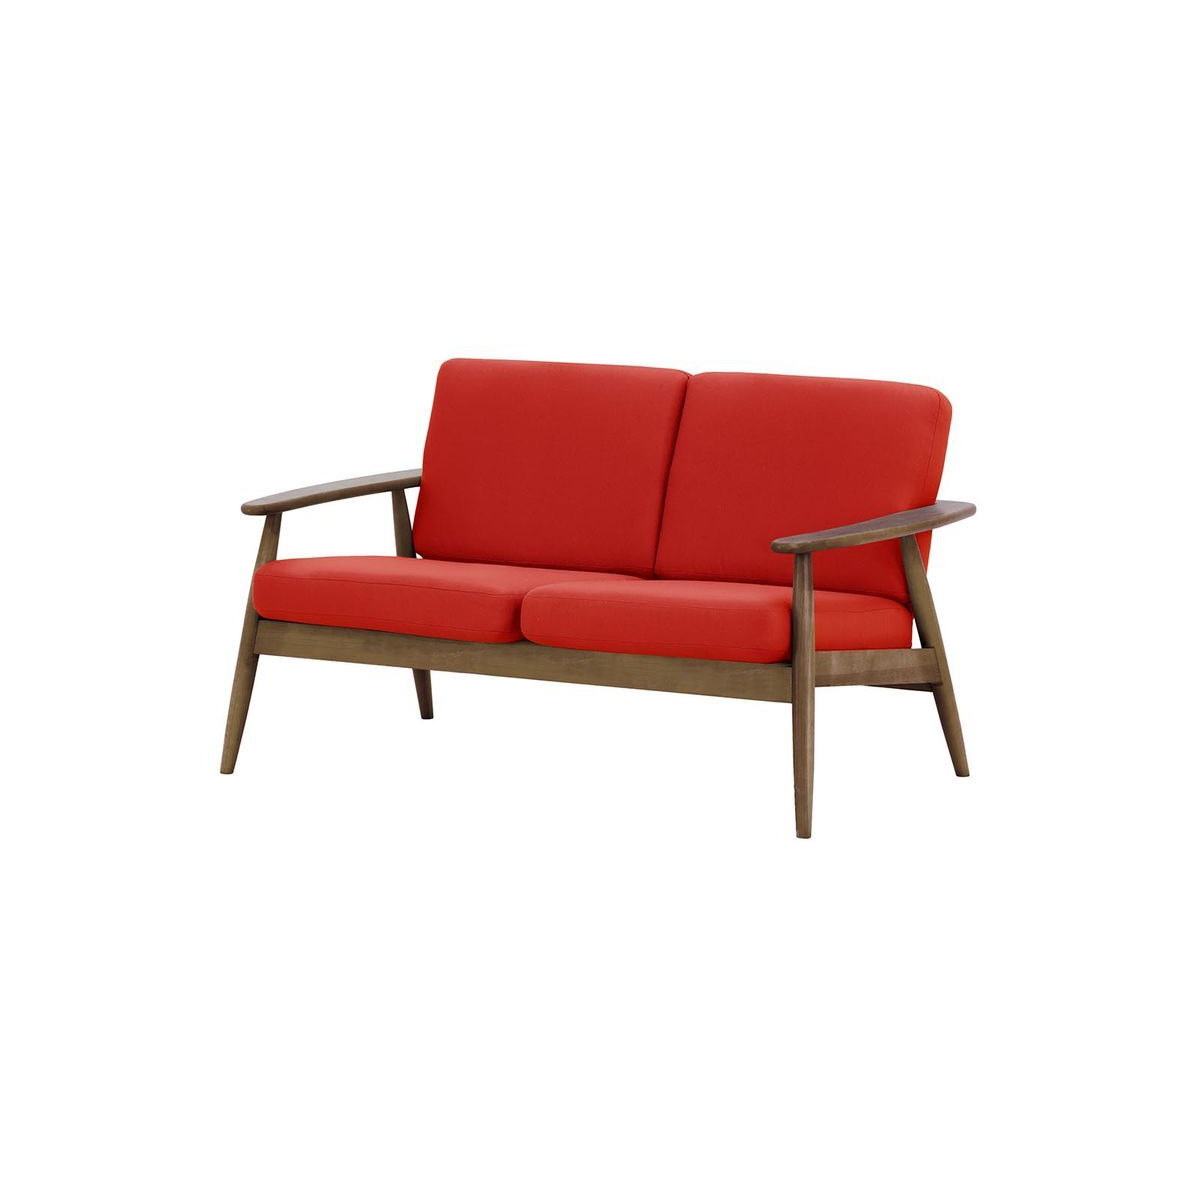 Demure Aqua 2 Seater Garden Sofa, red, Leg colour: 8021 brown - image 1